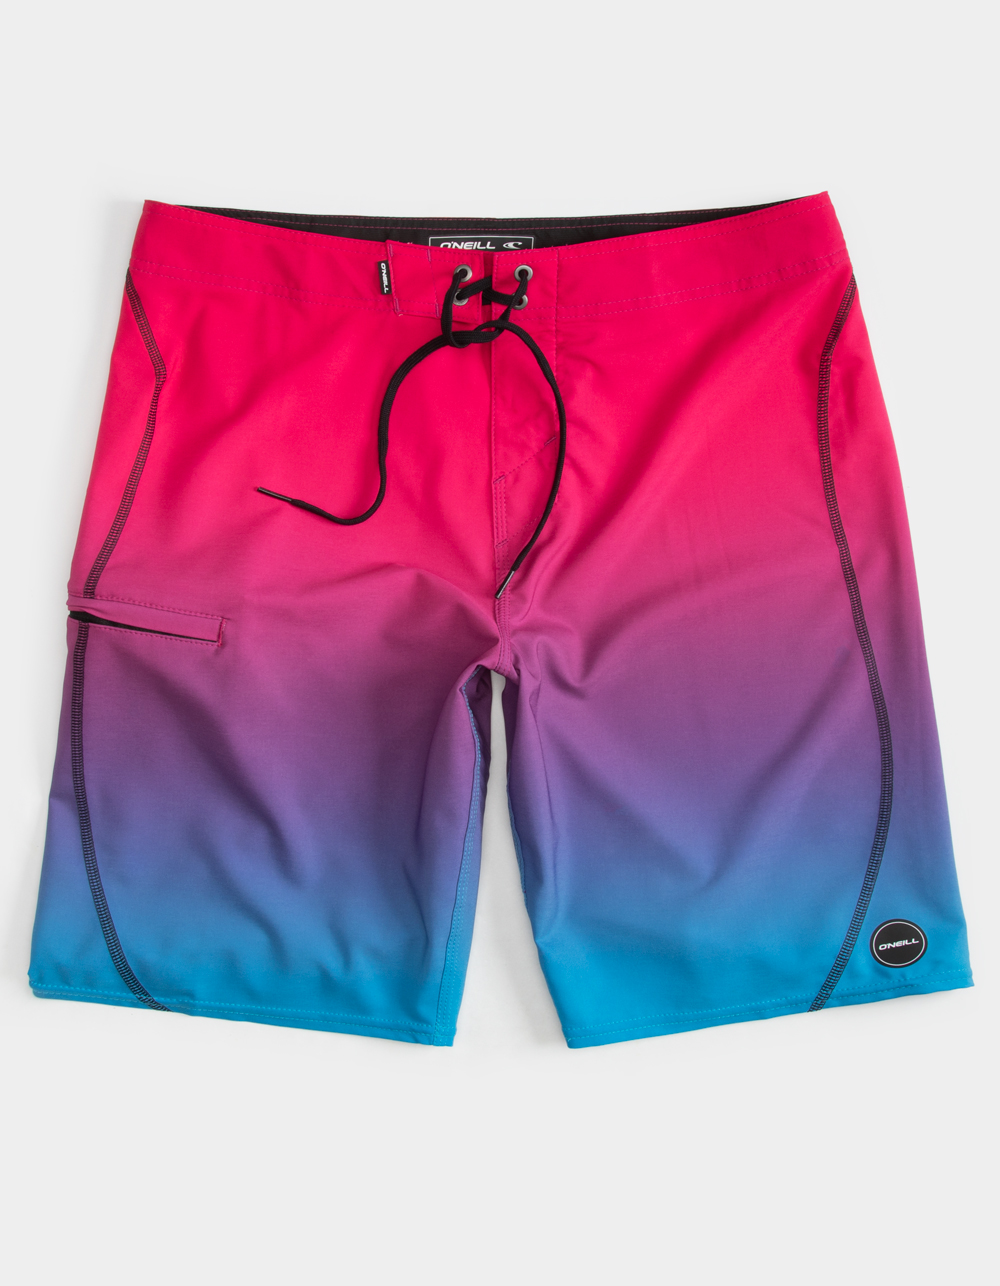 O'NEILL S Seam Hot Pink Boardshorts